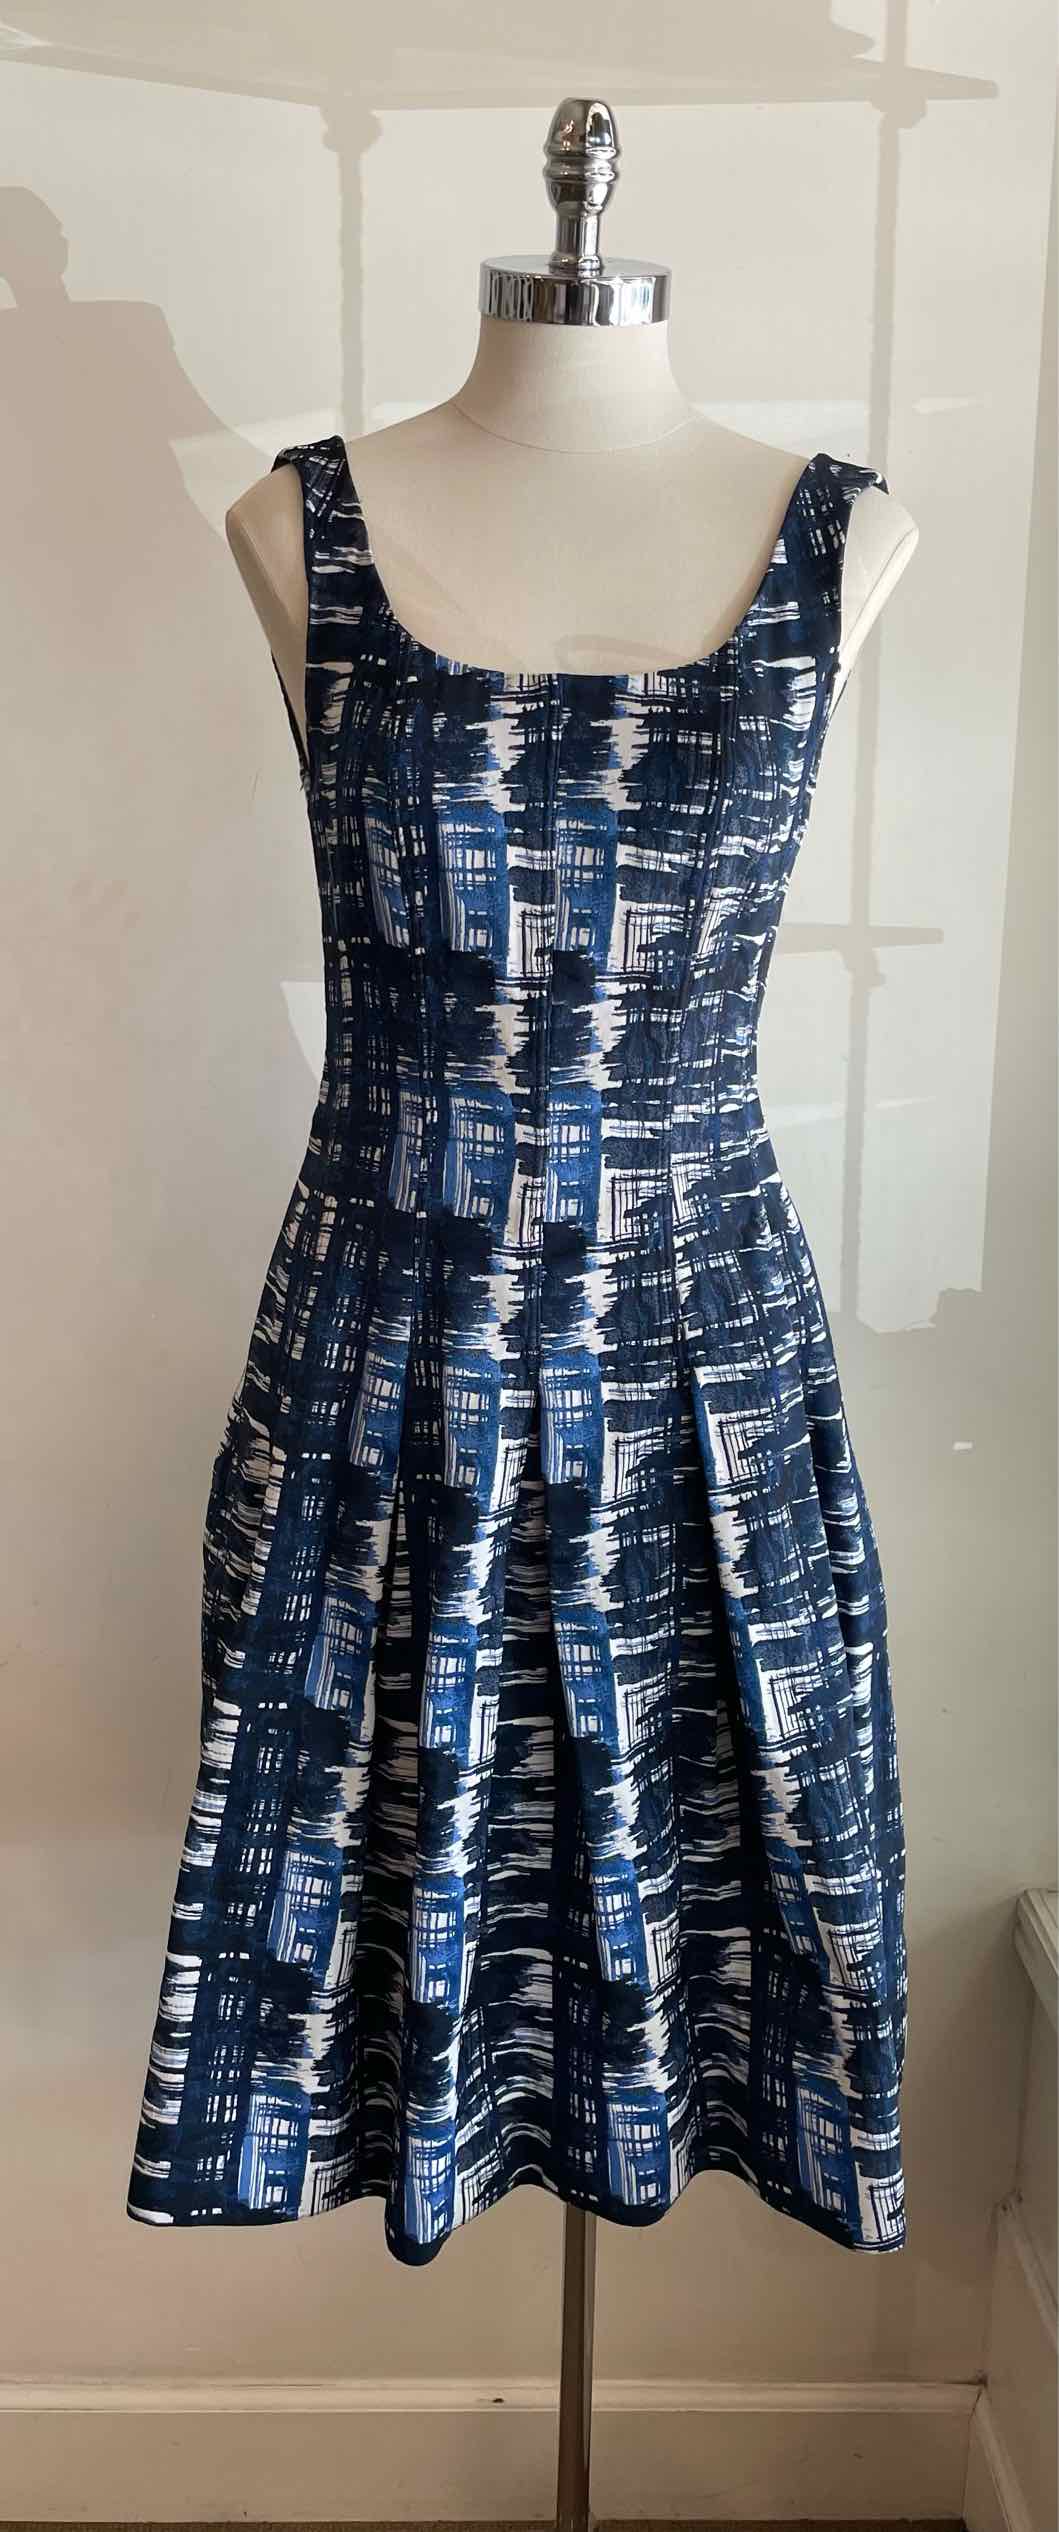 OSCAR DE LA RENTA Size 6 Black & Blue Abstract Dress